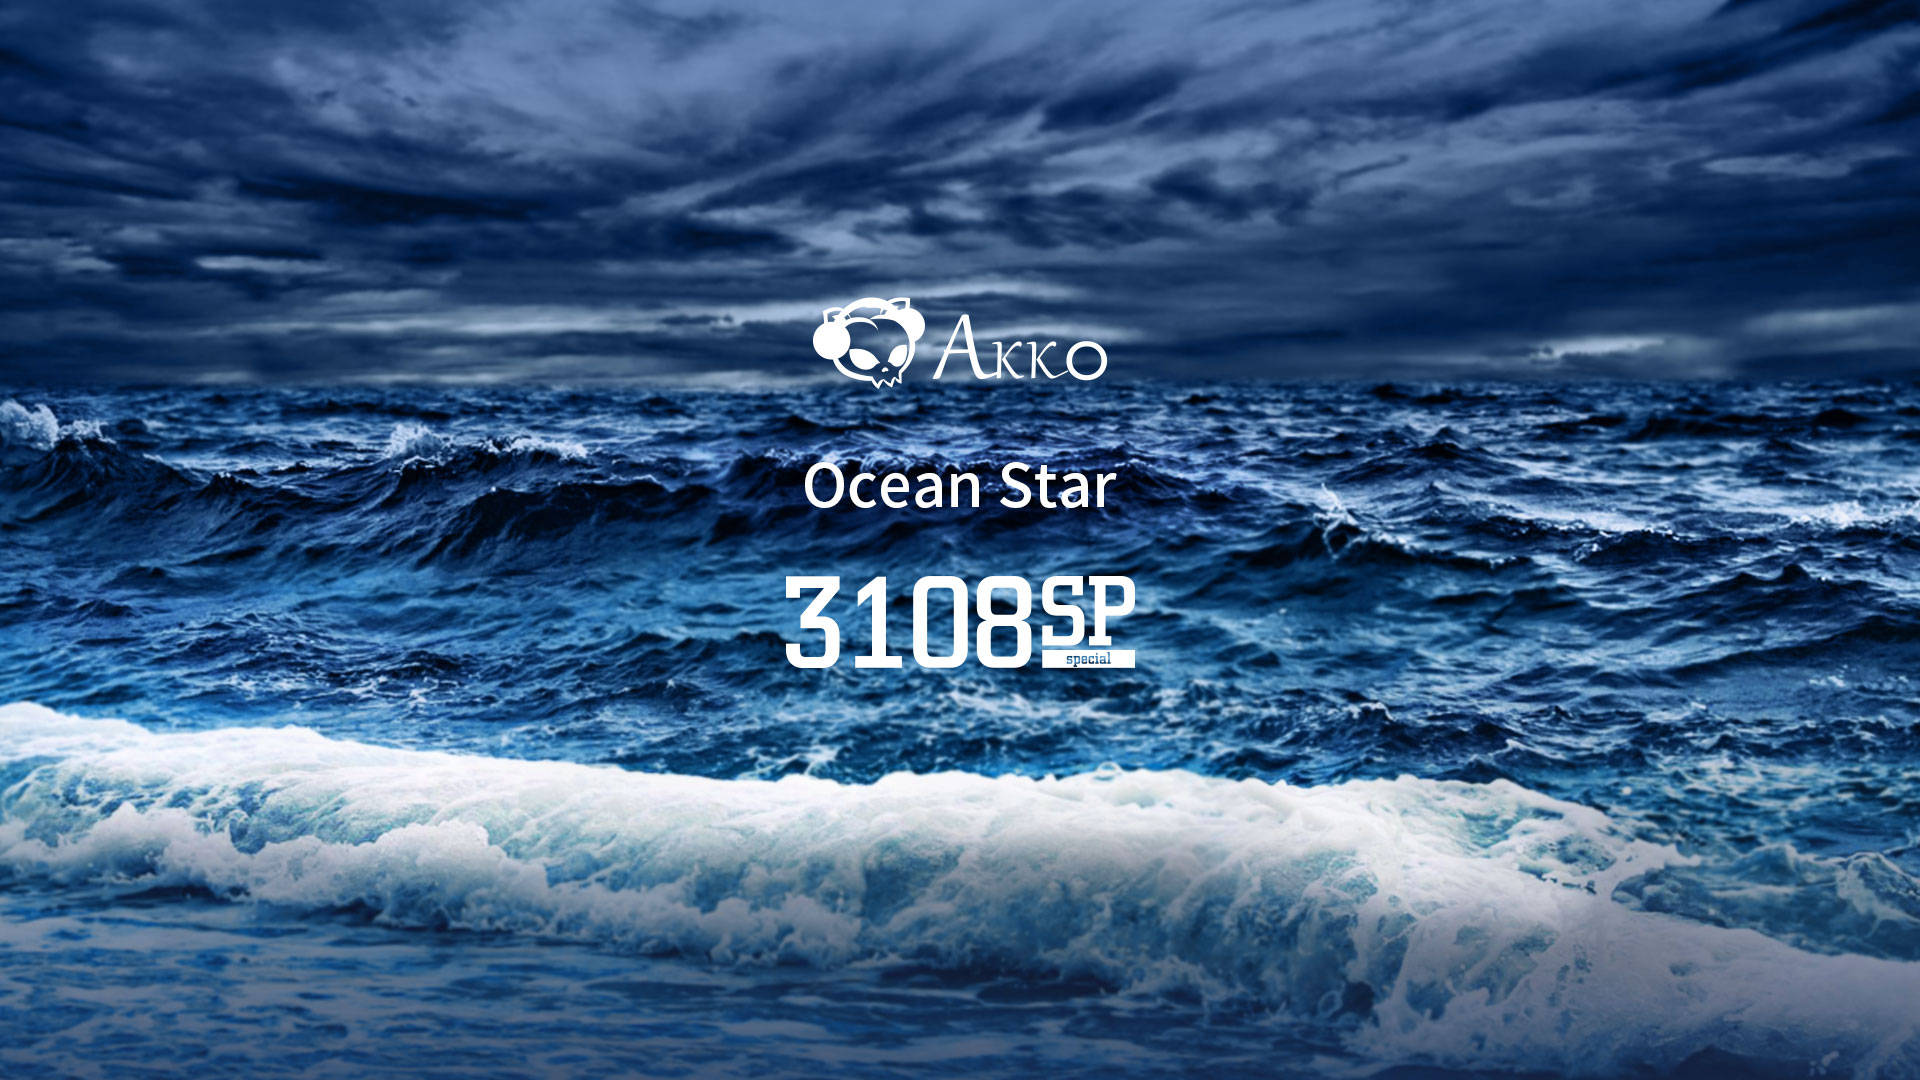 Океан совместные покупки. Star Ocean. Akko 3087ds Ocean Star. СП оушен. Океан браузер.